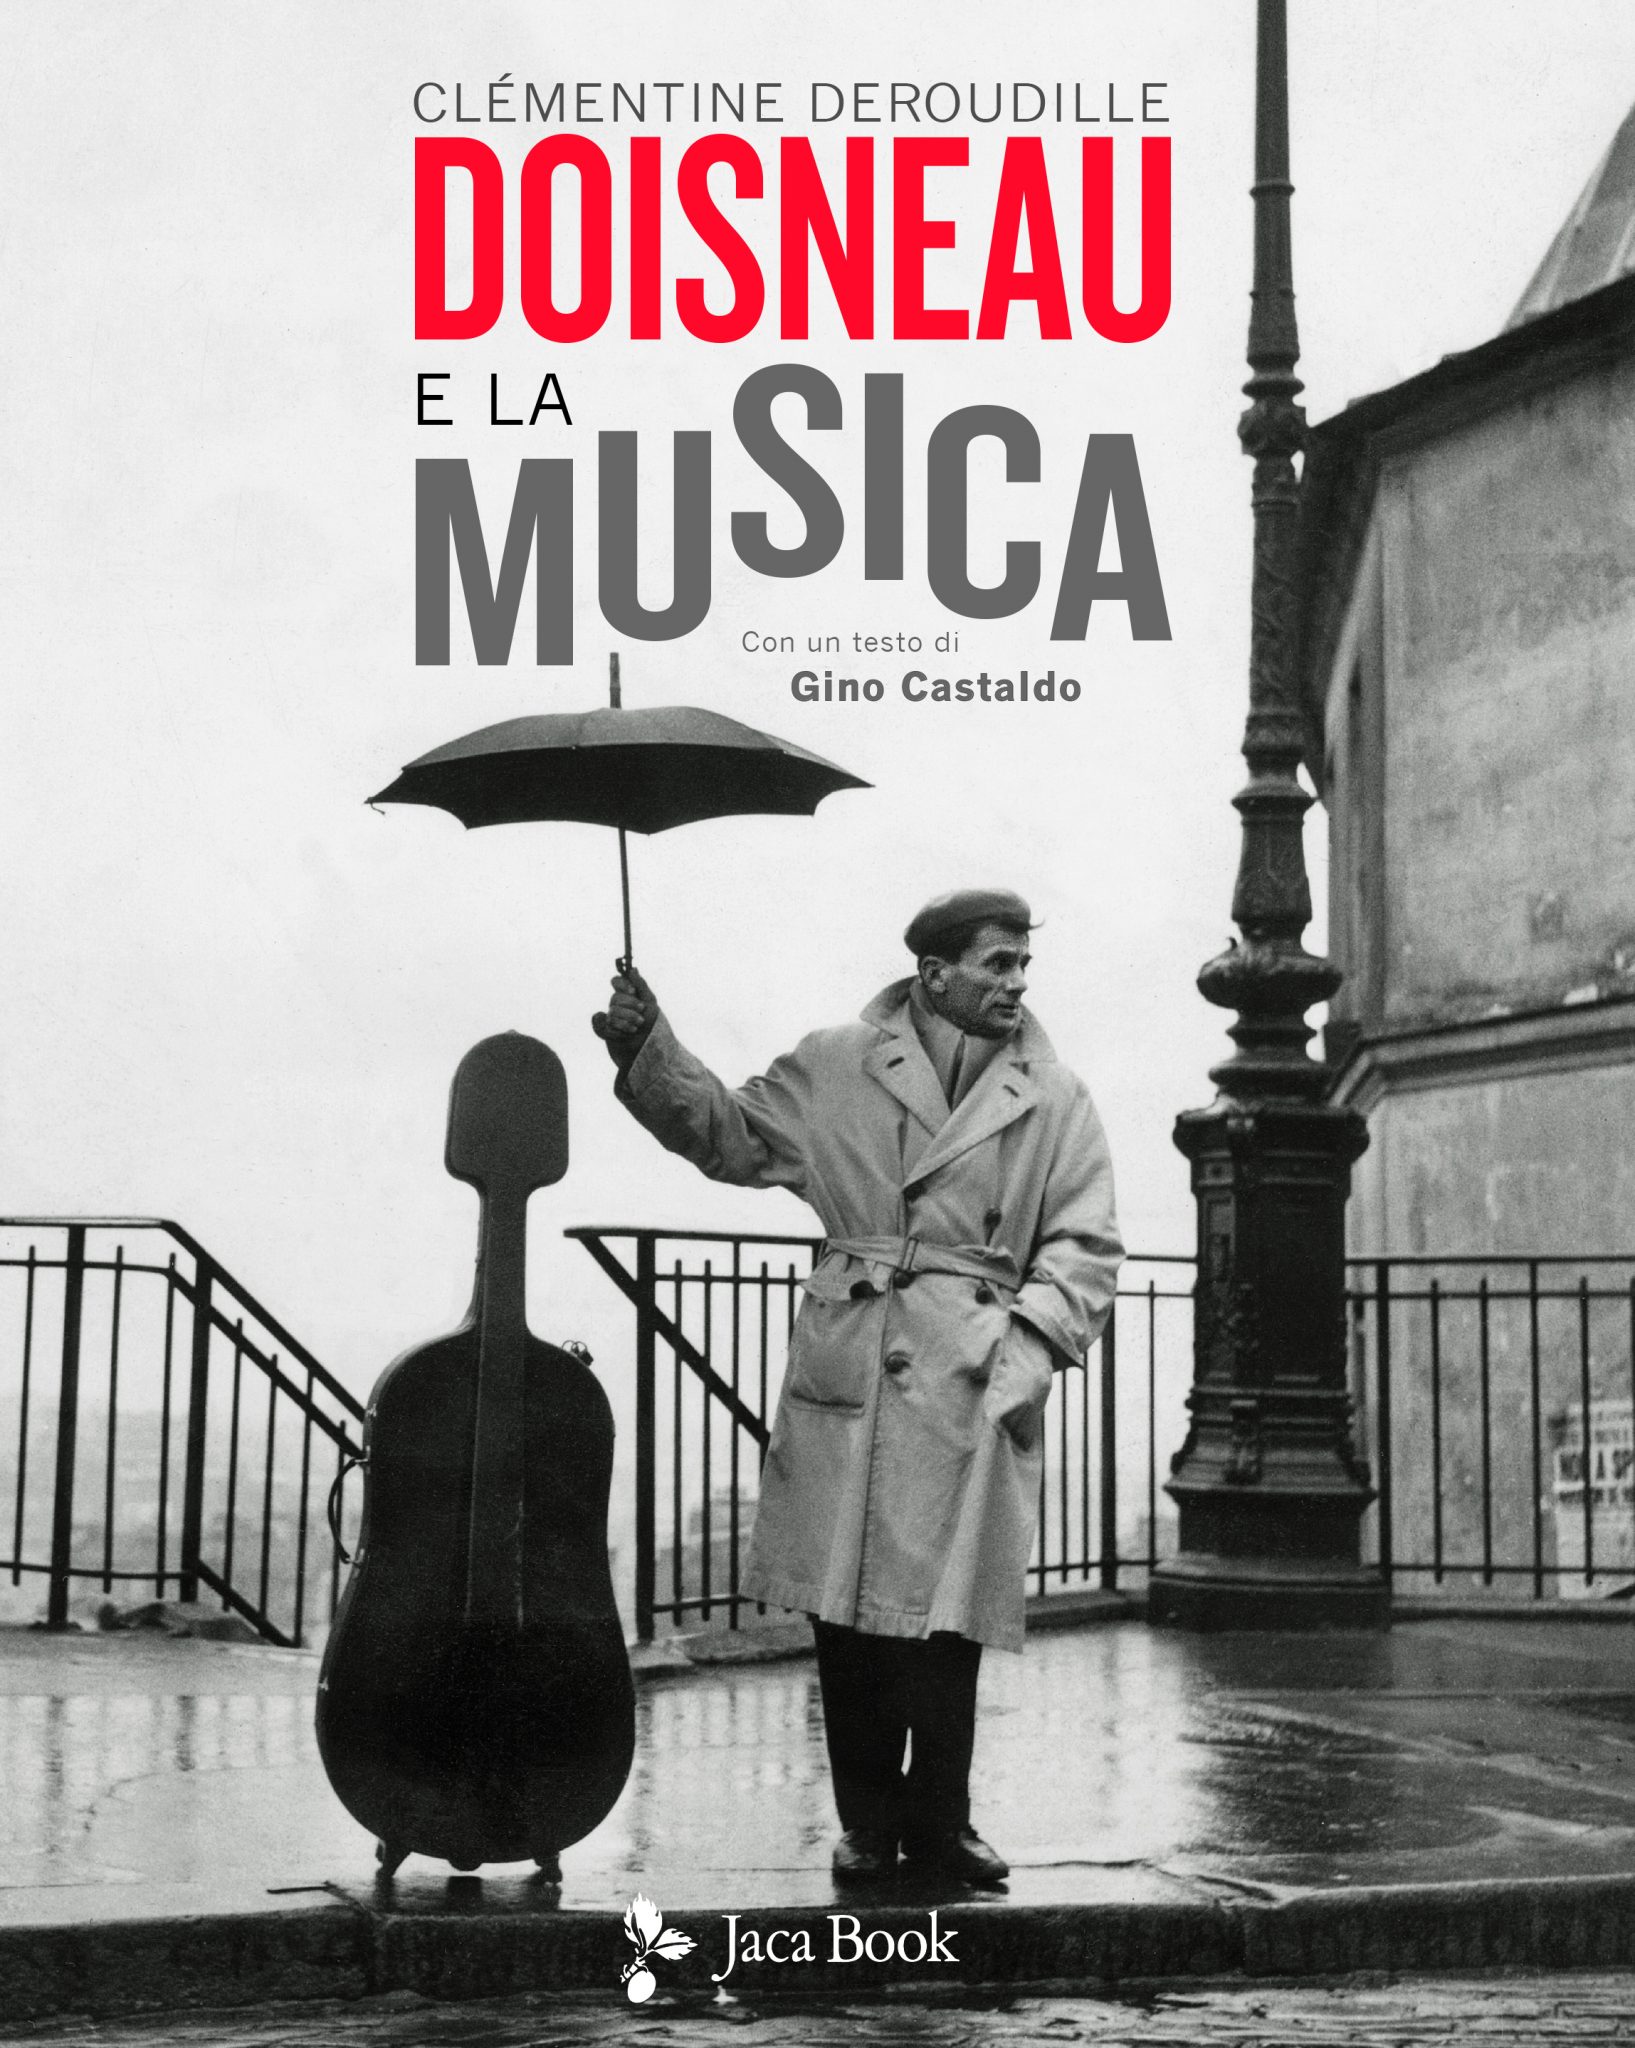 Deroudille Clémentine, «Doisneau e la musica», Jaca Book 2019, 188 pp.